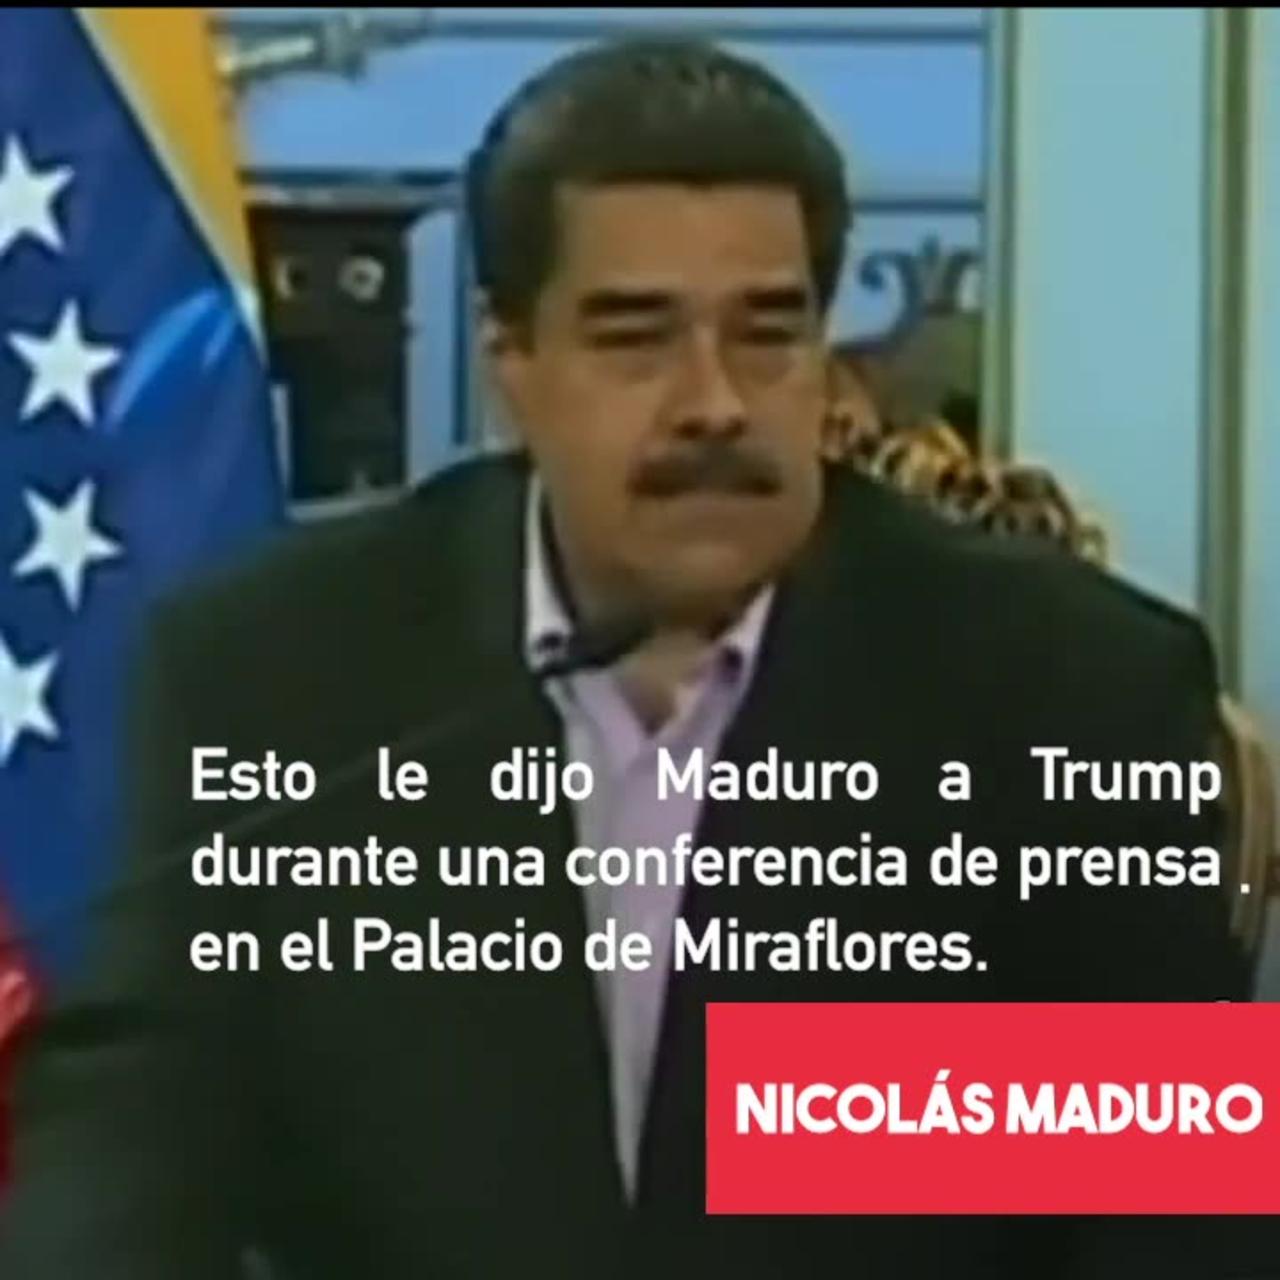 "Hands off Venezuela, de inmediati" - Le dijo Maduro a Donald Trump.